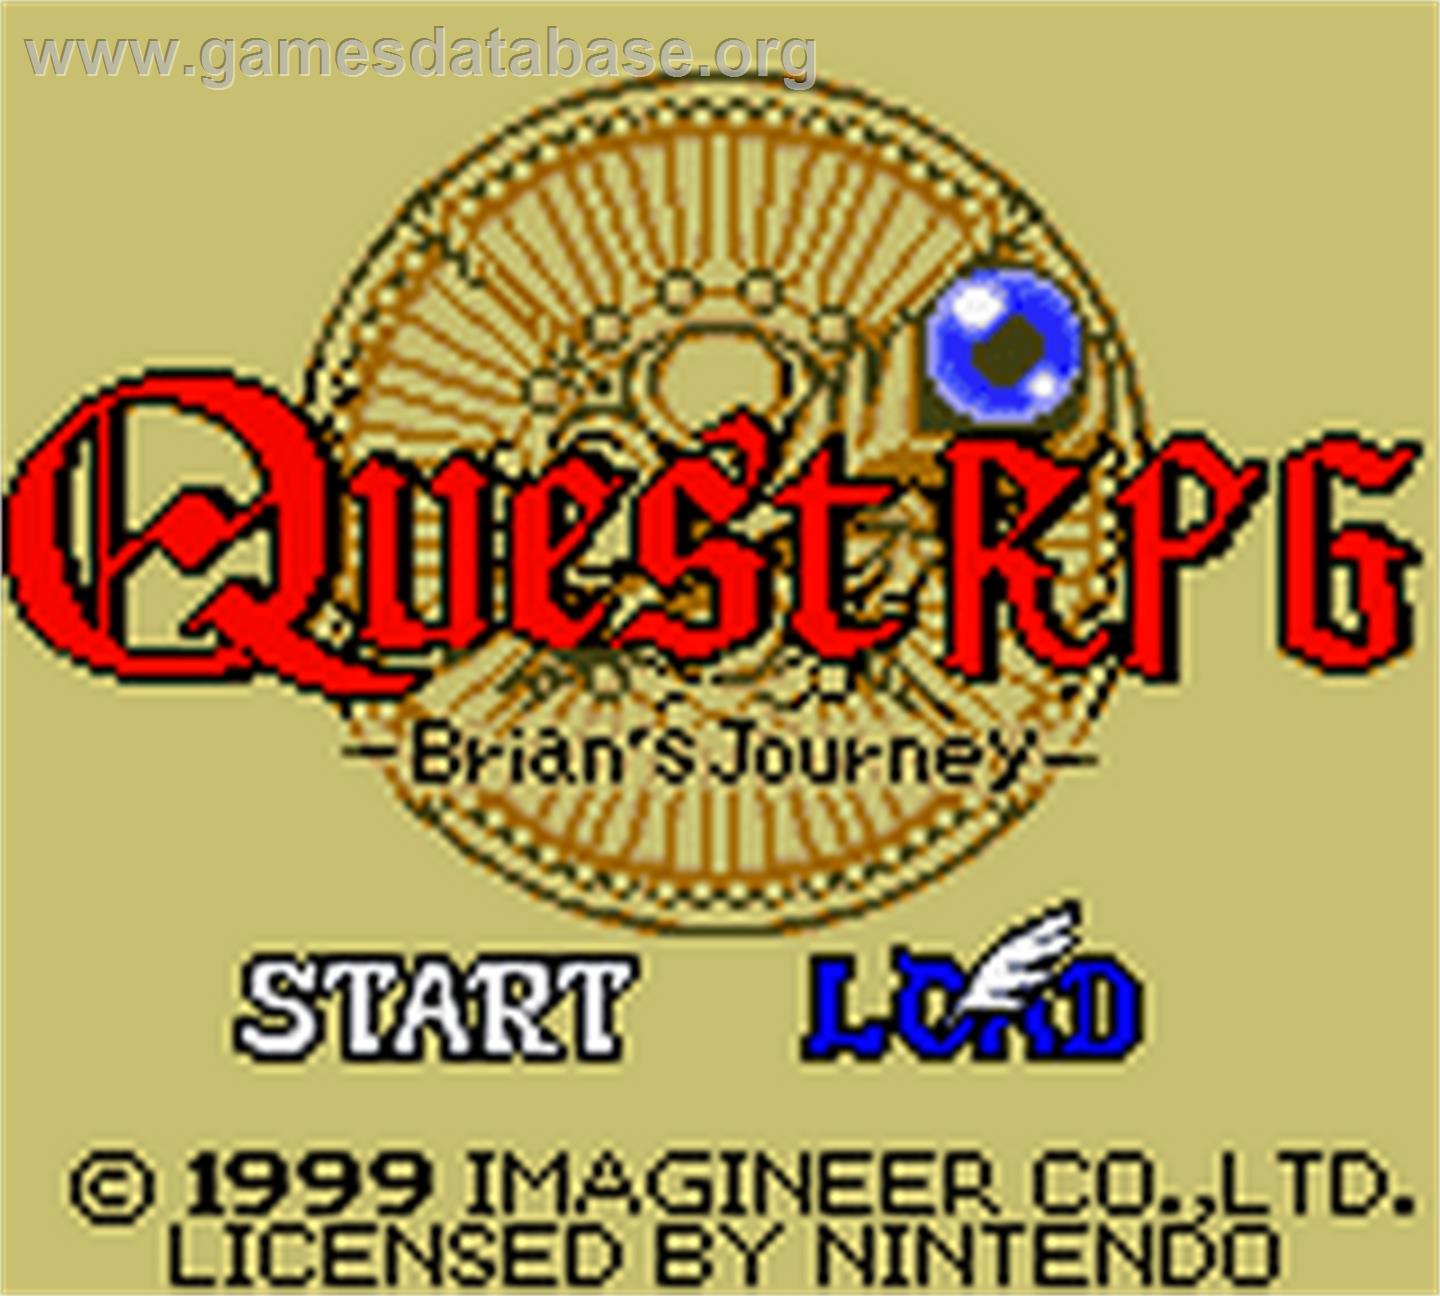 Quest RPG - Brian's Journey - Nintendo Game Boy Color - Artwork - Title Screen